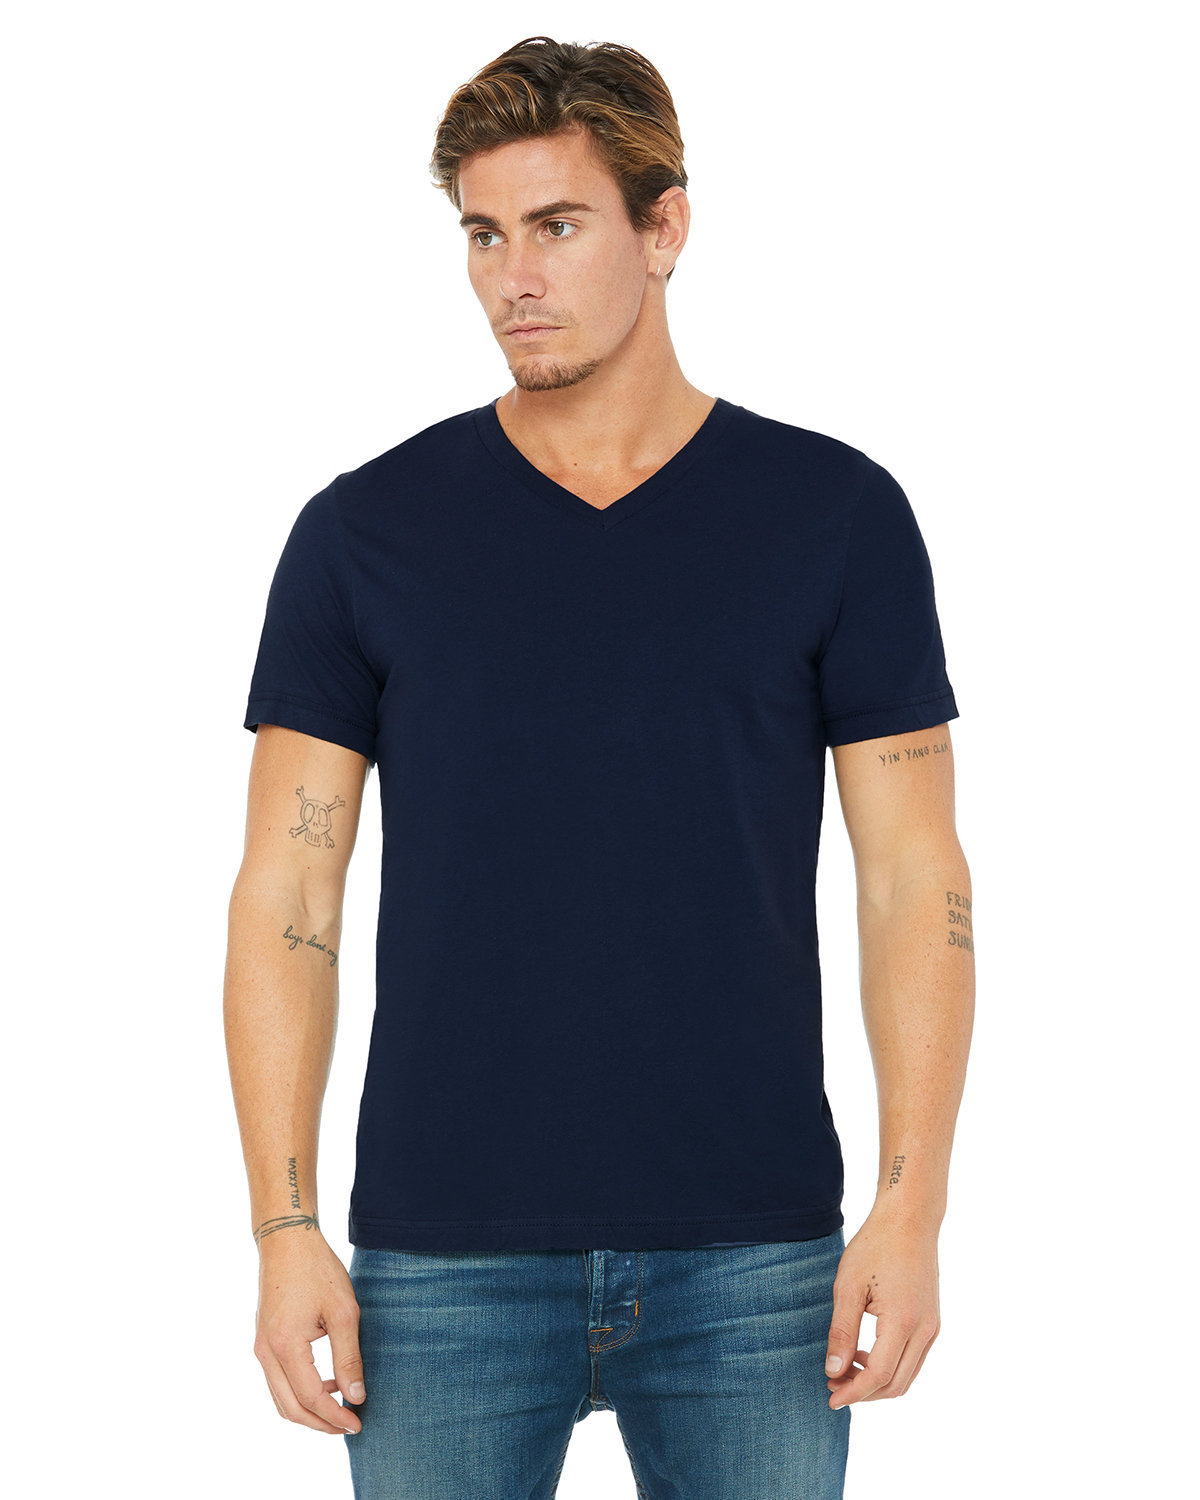 Bella + Canvas Unisex Jersey Short-Sleeve V-Neck T-Shirt NAVY 